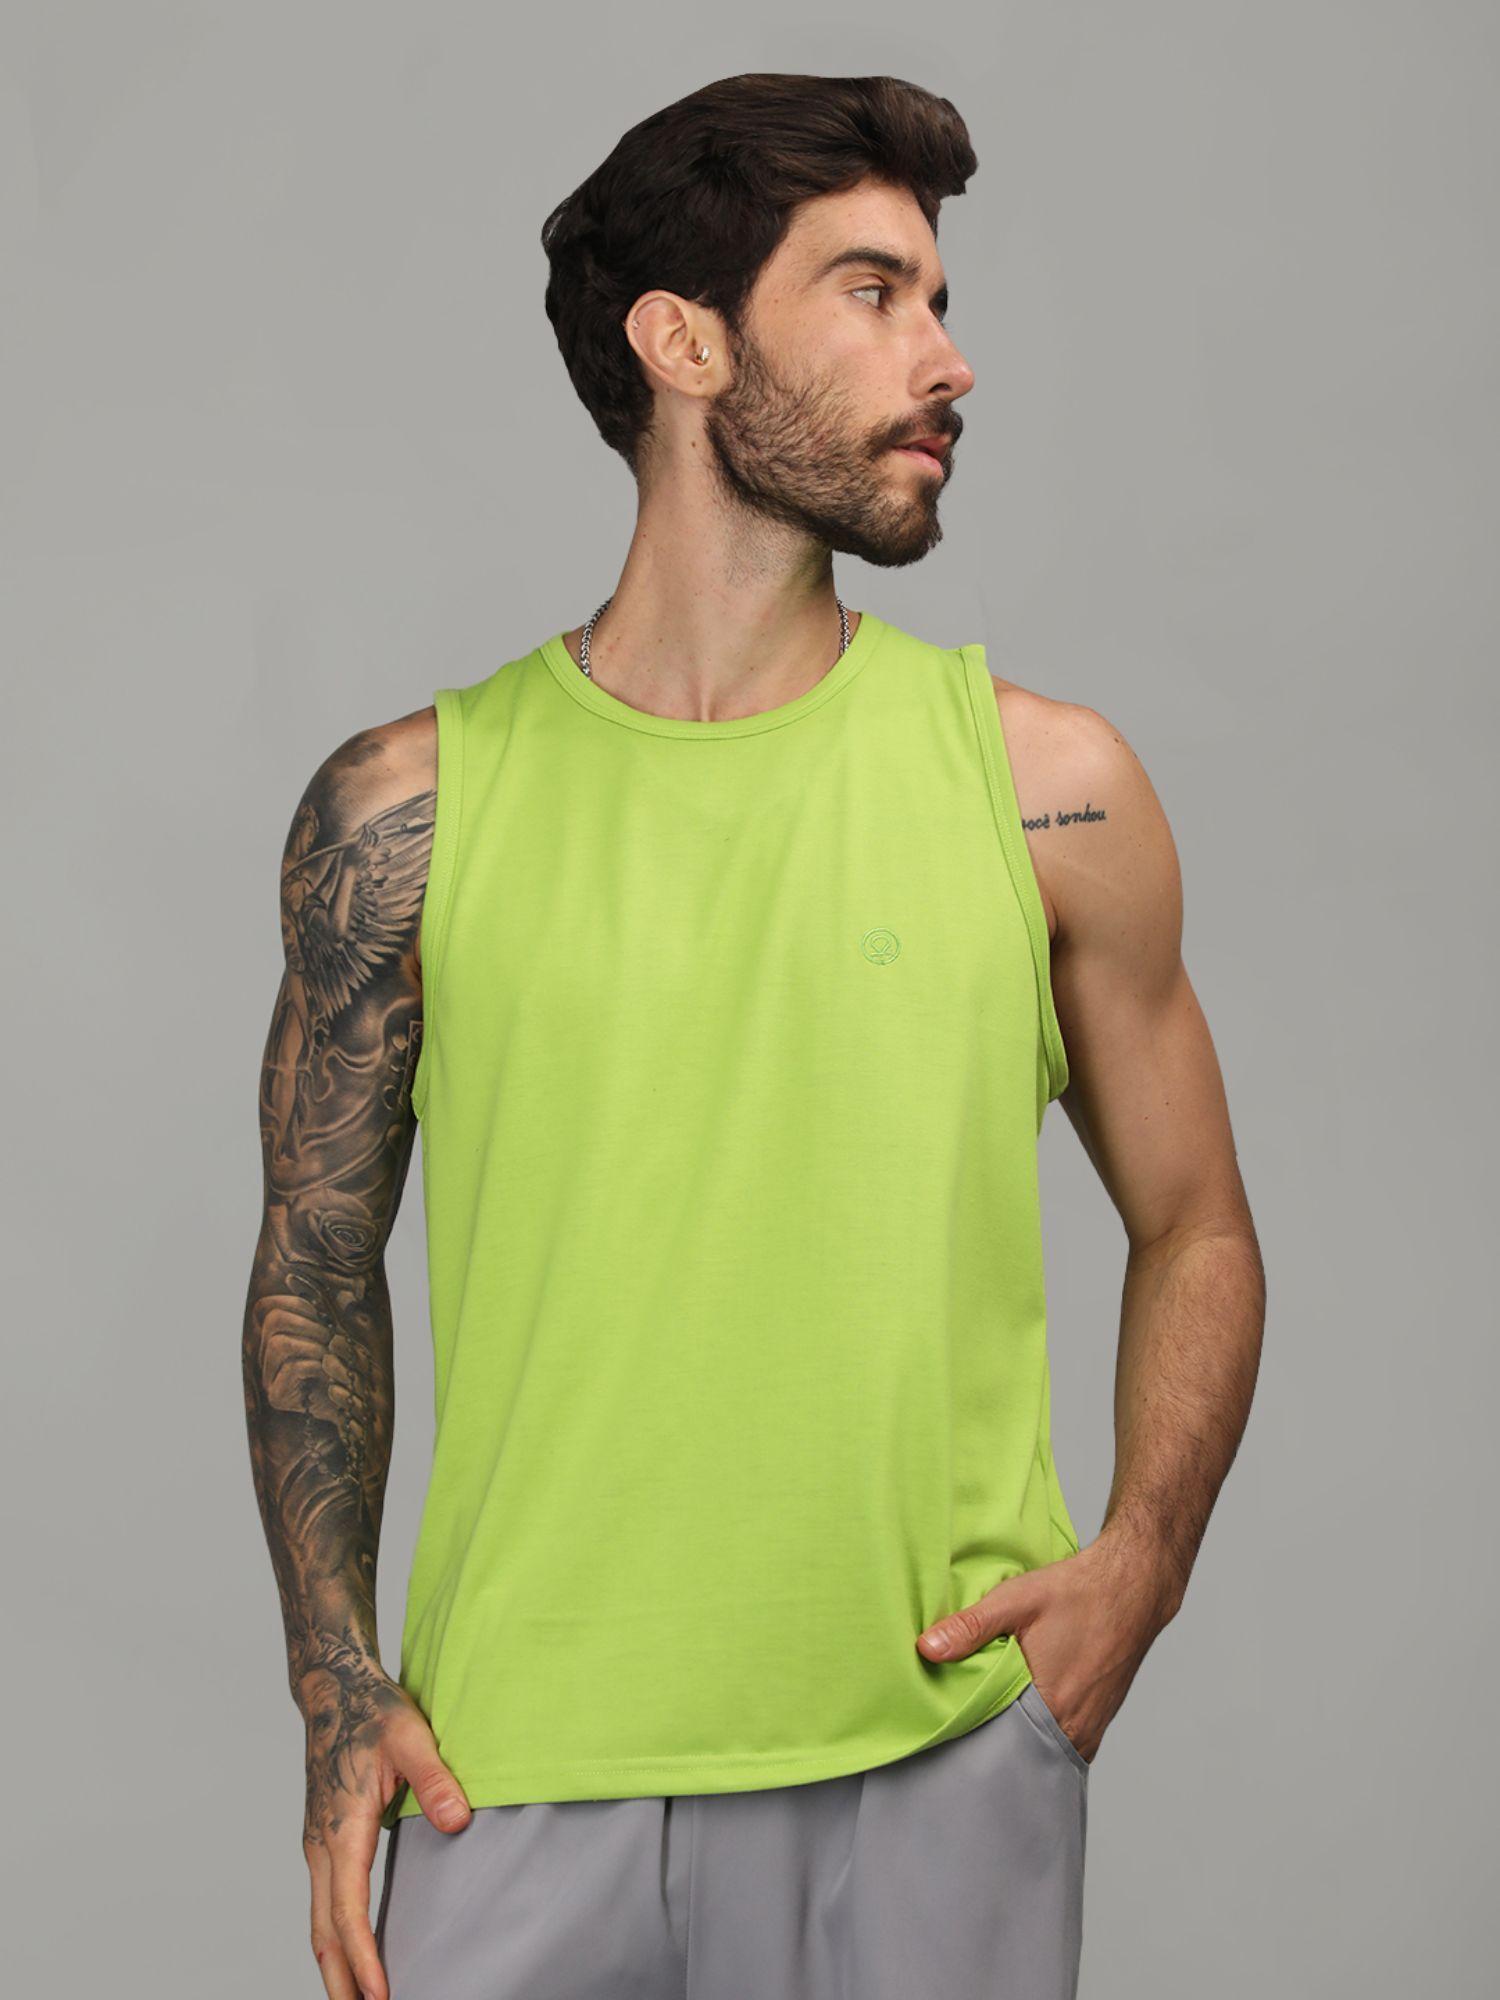 mens gym tank tops sleeveless sports vest